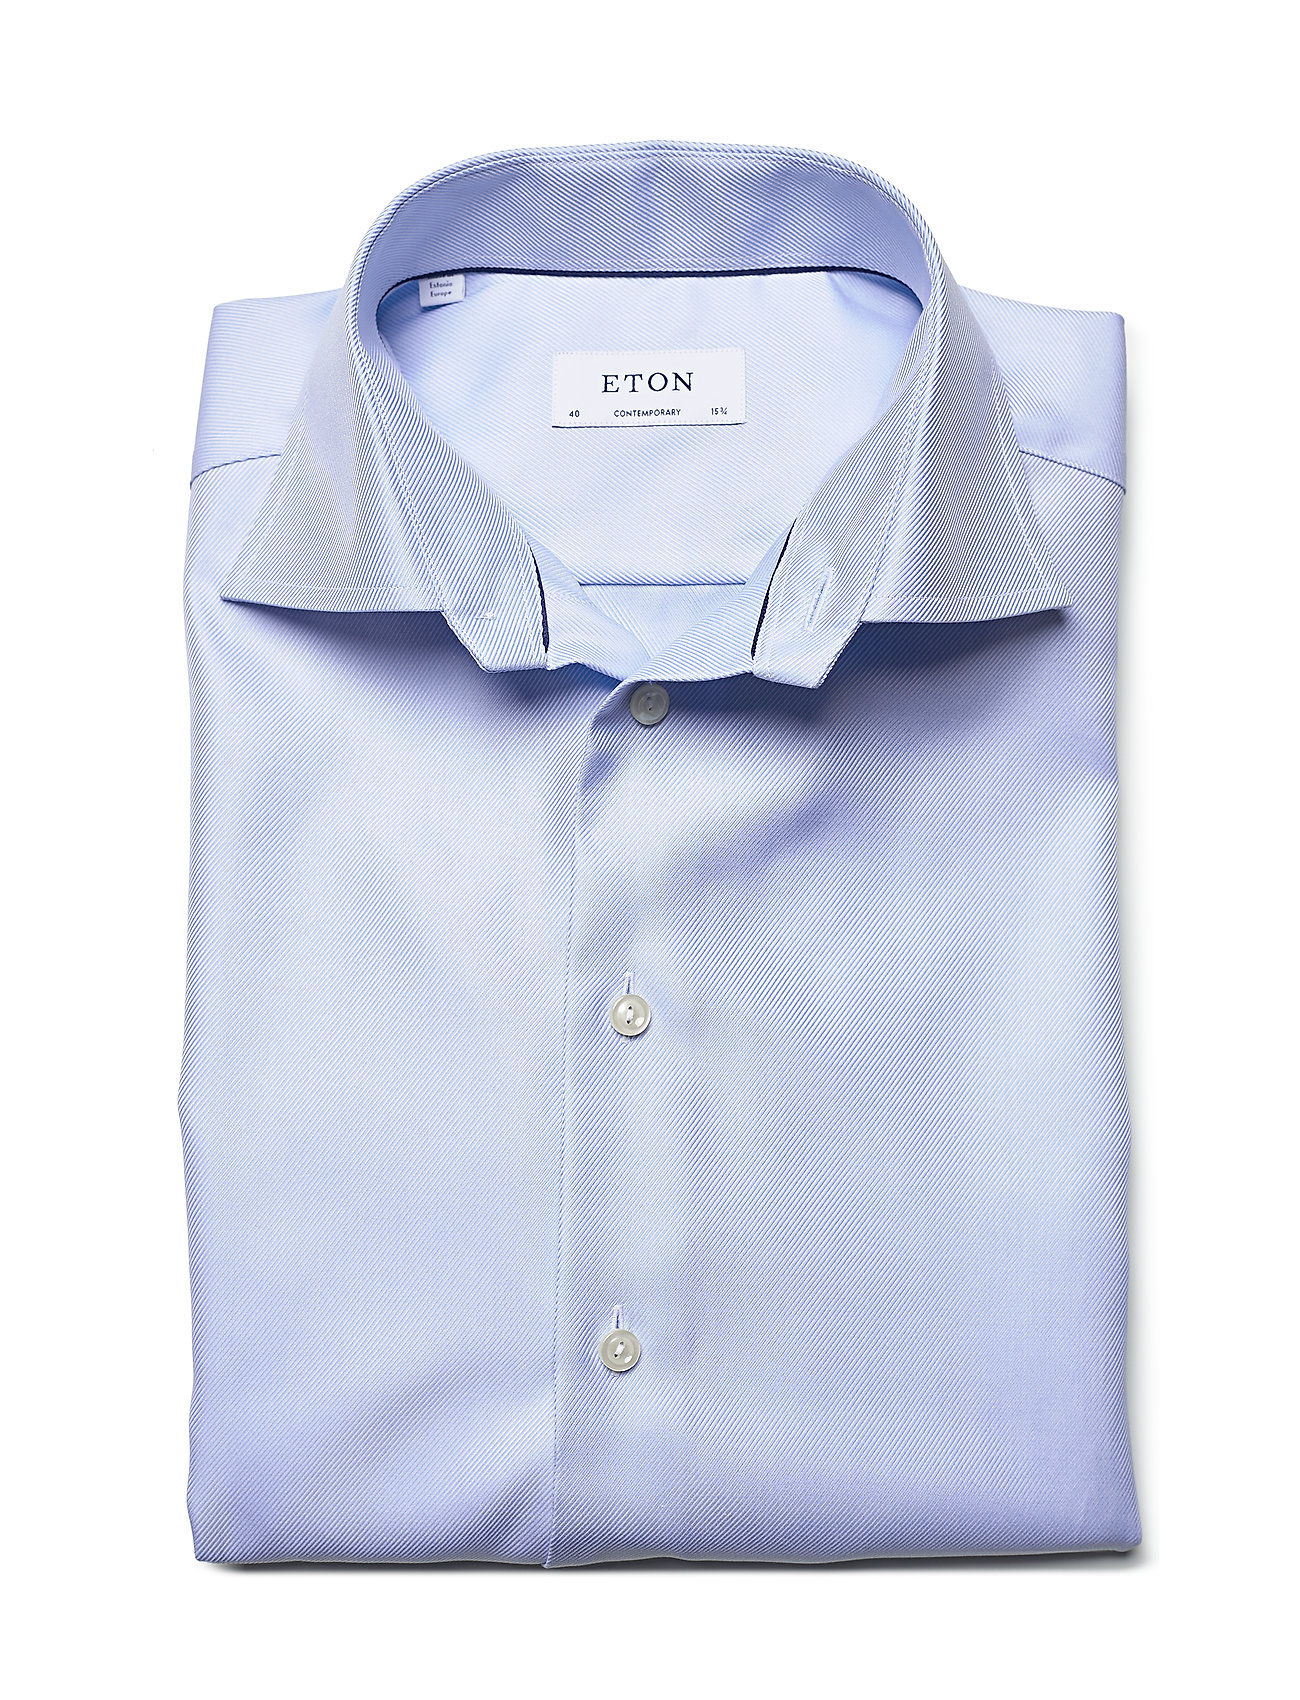 Eton - Harrogate-Collection-Contemporary fit - leinenhemden - blue - 5